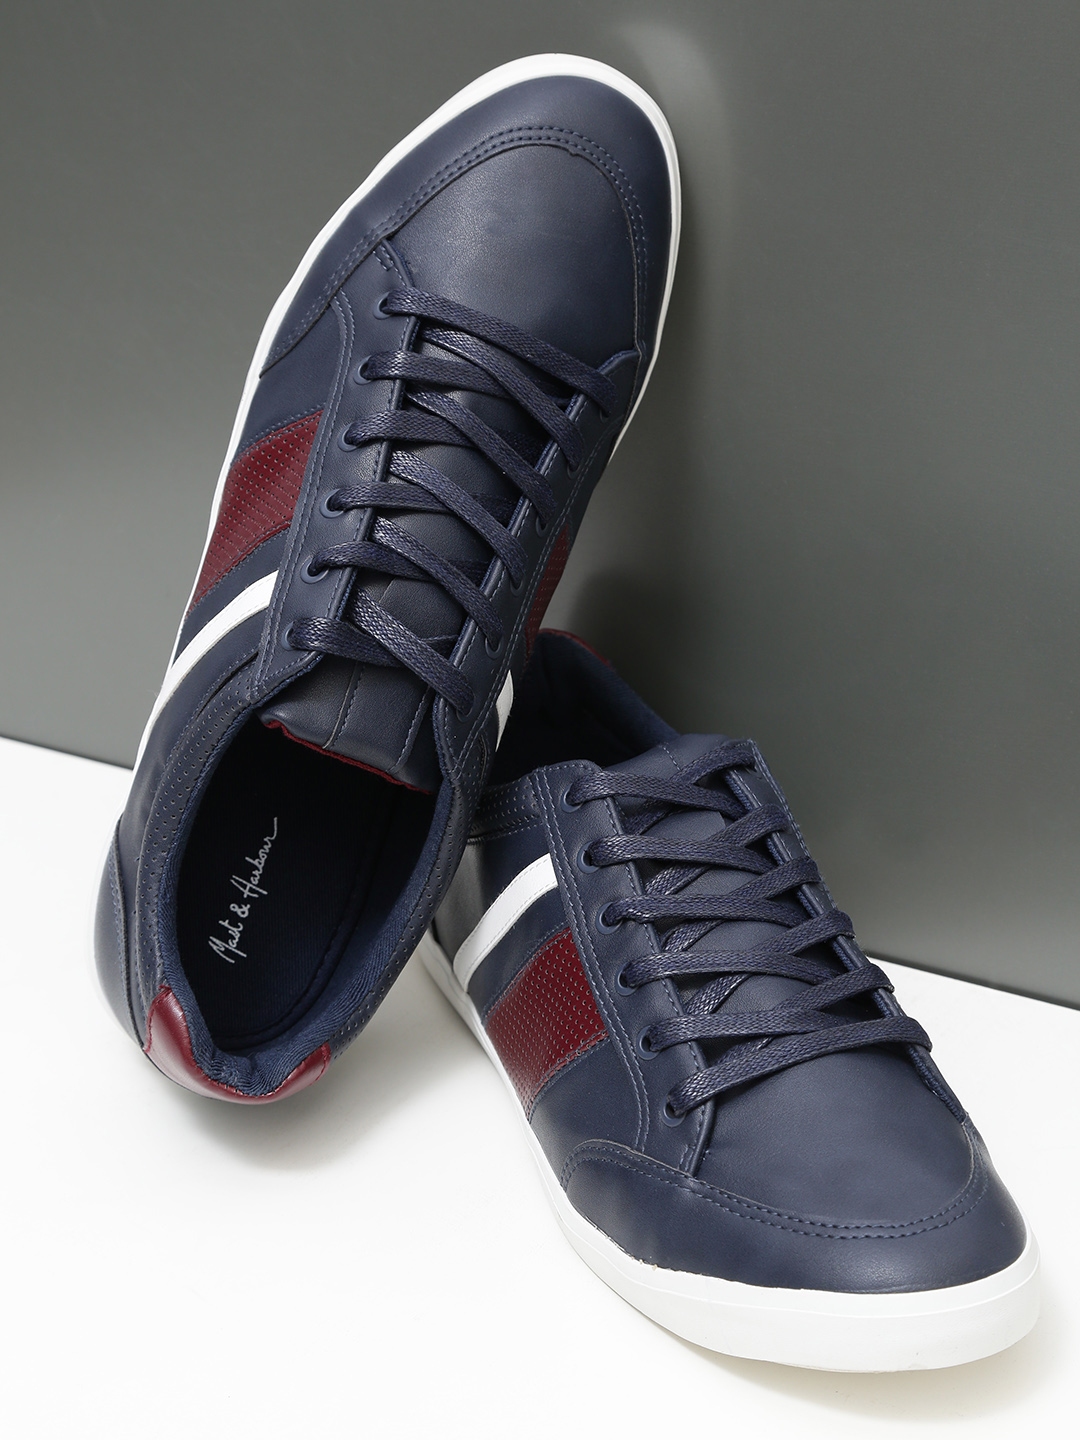 mast & harbour navy blue sneakers